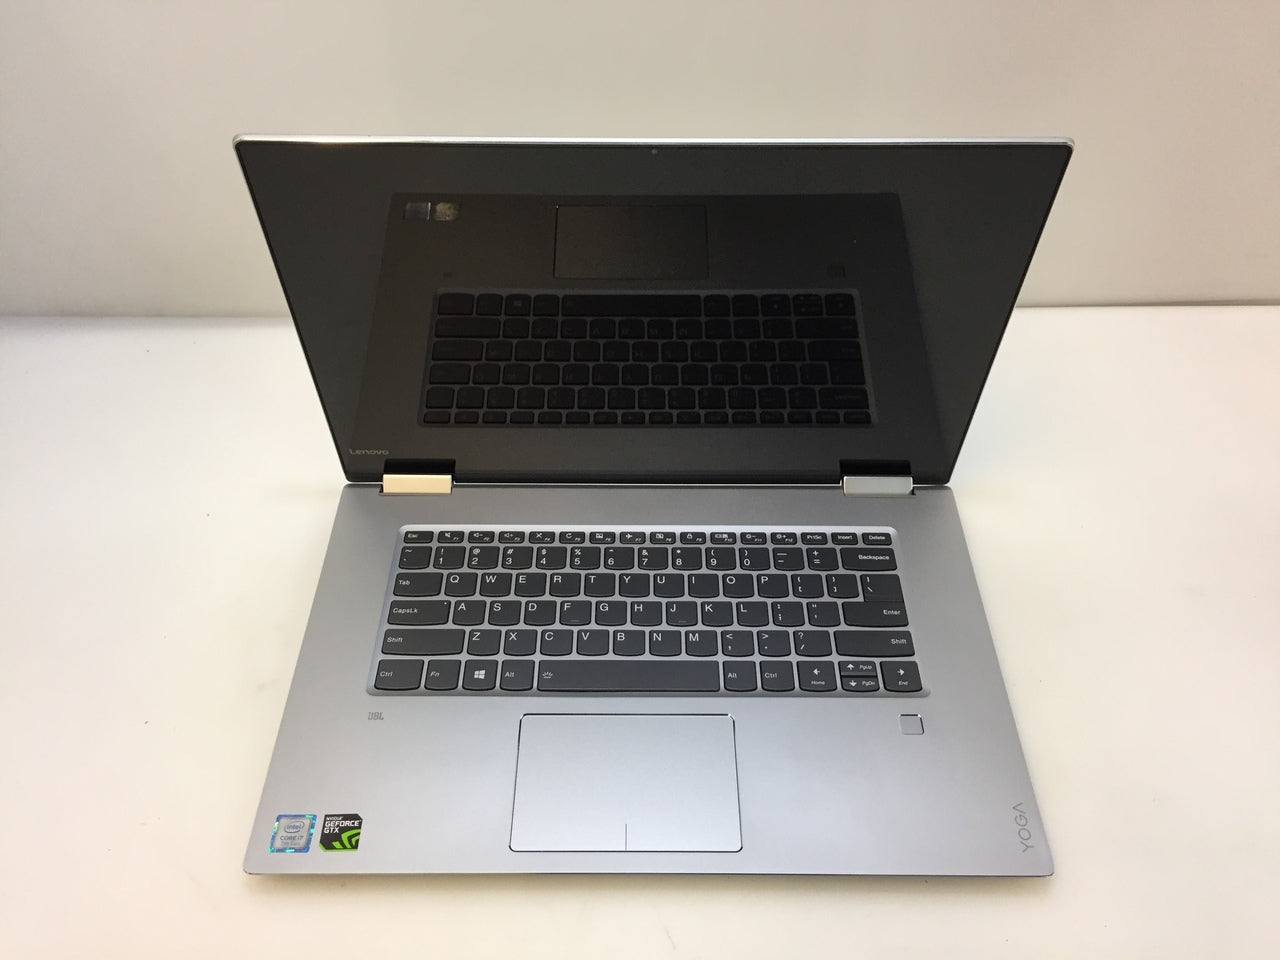 Stedord Savant motivet Laptop Lenovo Yoga 720-15iKB 15.6" 4K Touch i7-7700HQ 16GB 512GB SSD 8 – NT  Electronics LLC